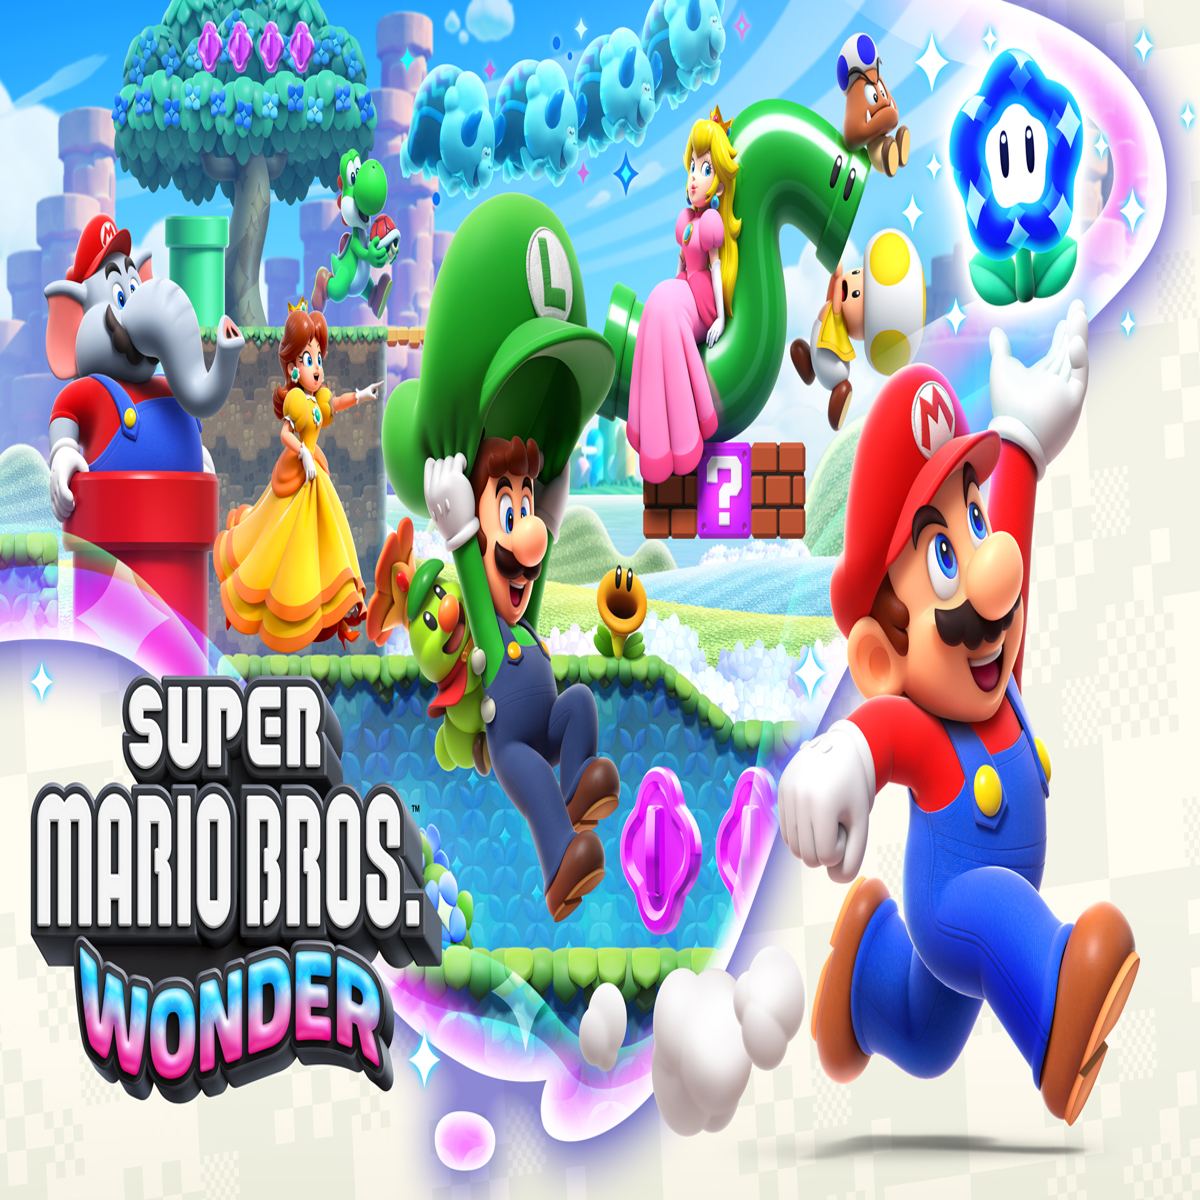 Bowser likes 'em big in Super Mario Bros. Wonder